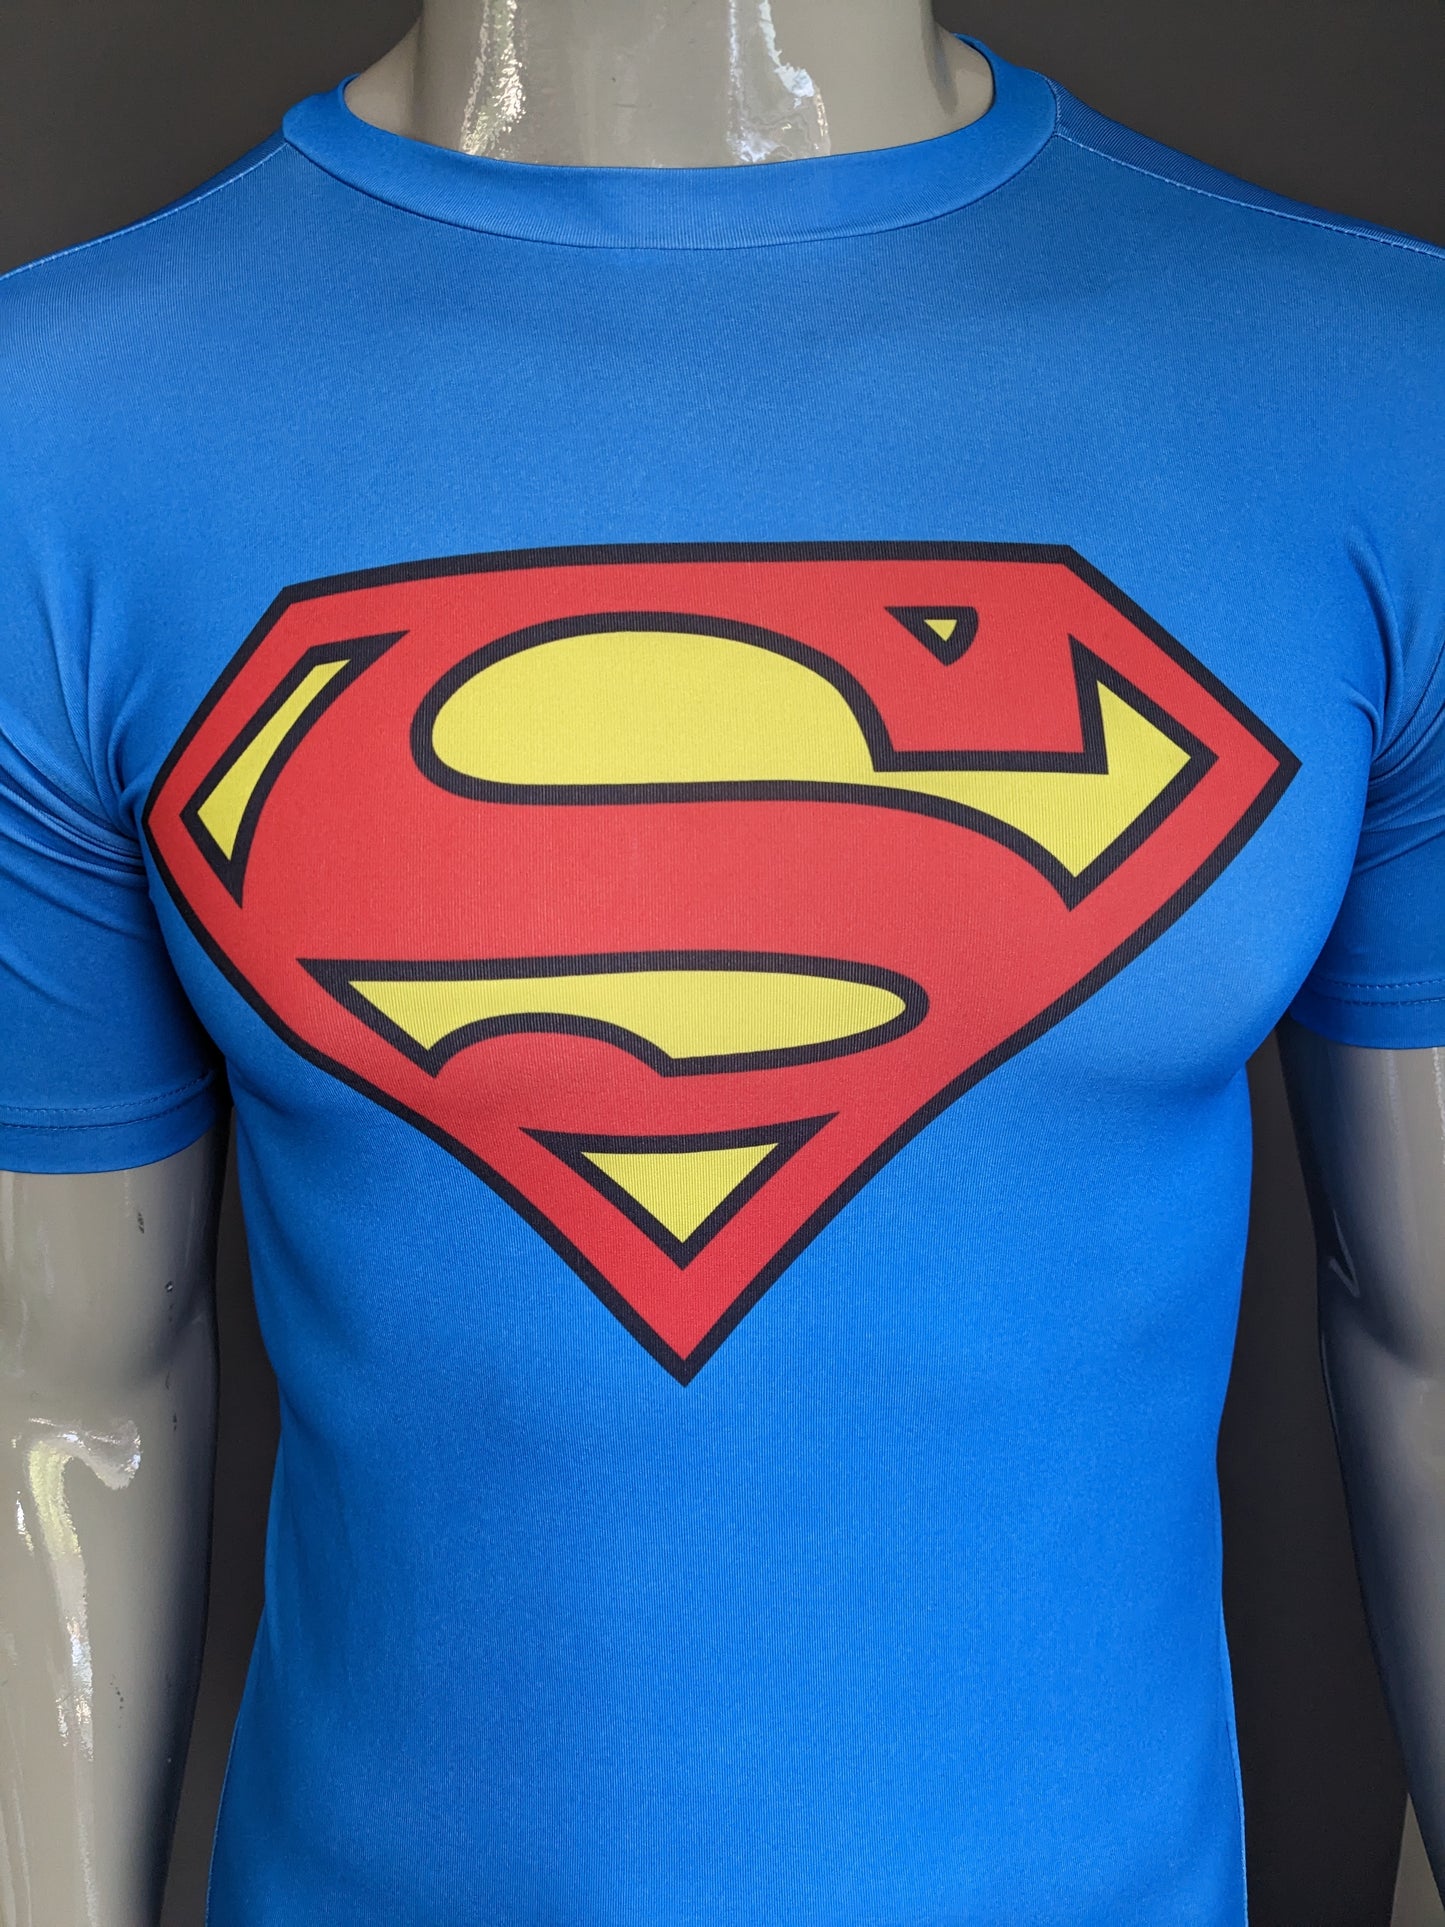 Superman shirt. Blauw Rood Geel gekleurd. Maat S. stretch.